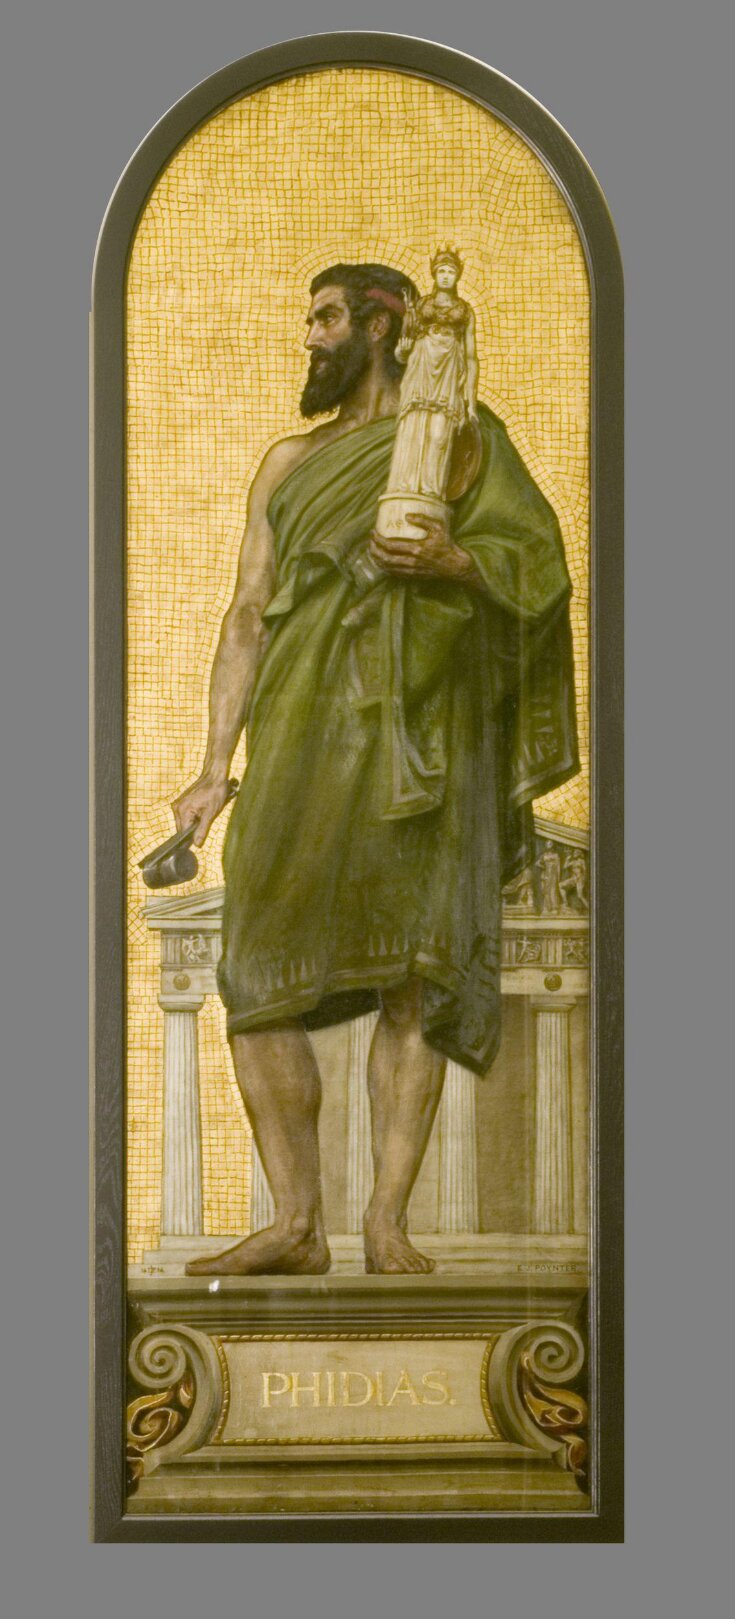 Pheidias, Greek Sculptor: design for a mosaic in the Museum (the 'Kensington Valhalla') top image